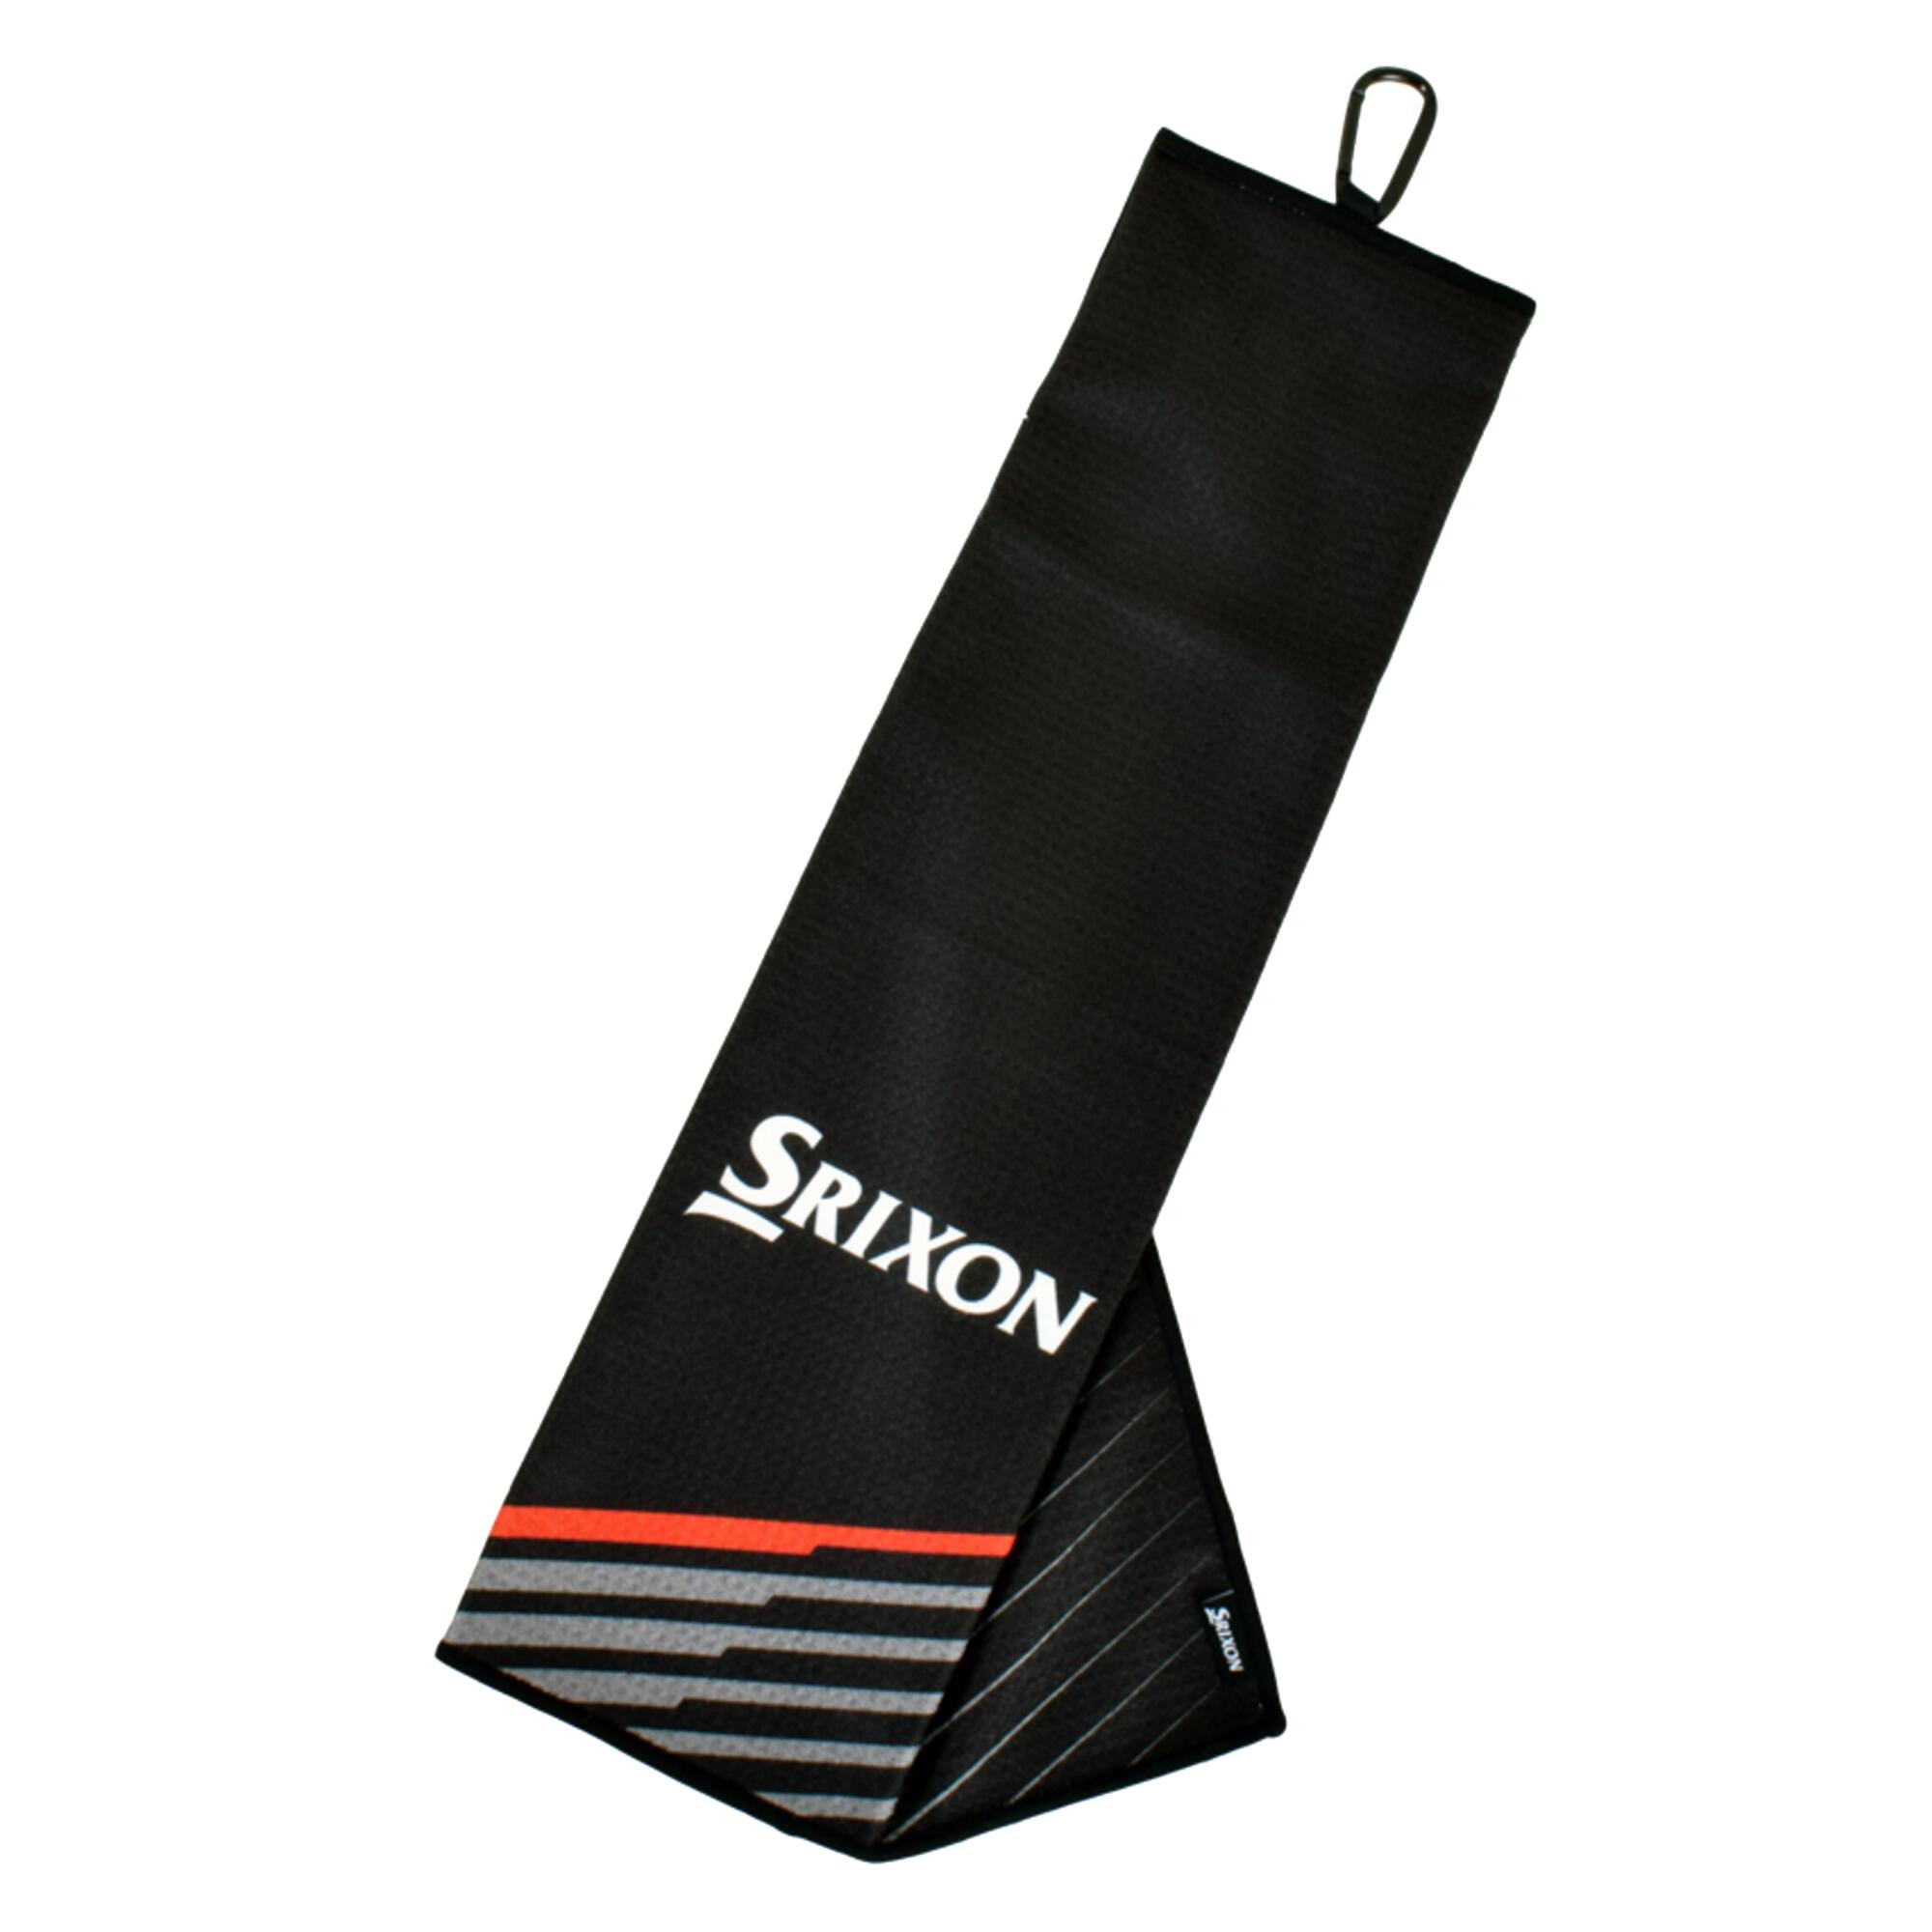 SRIXON Golf towel - SRIXON black